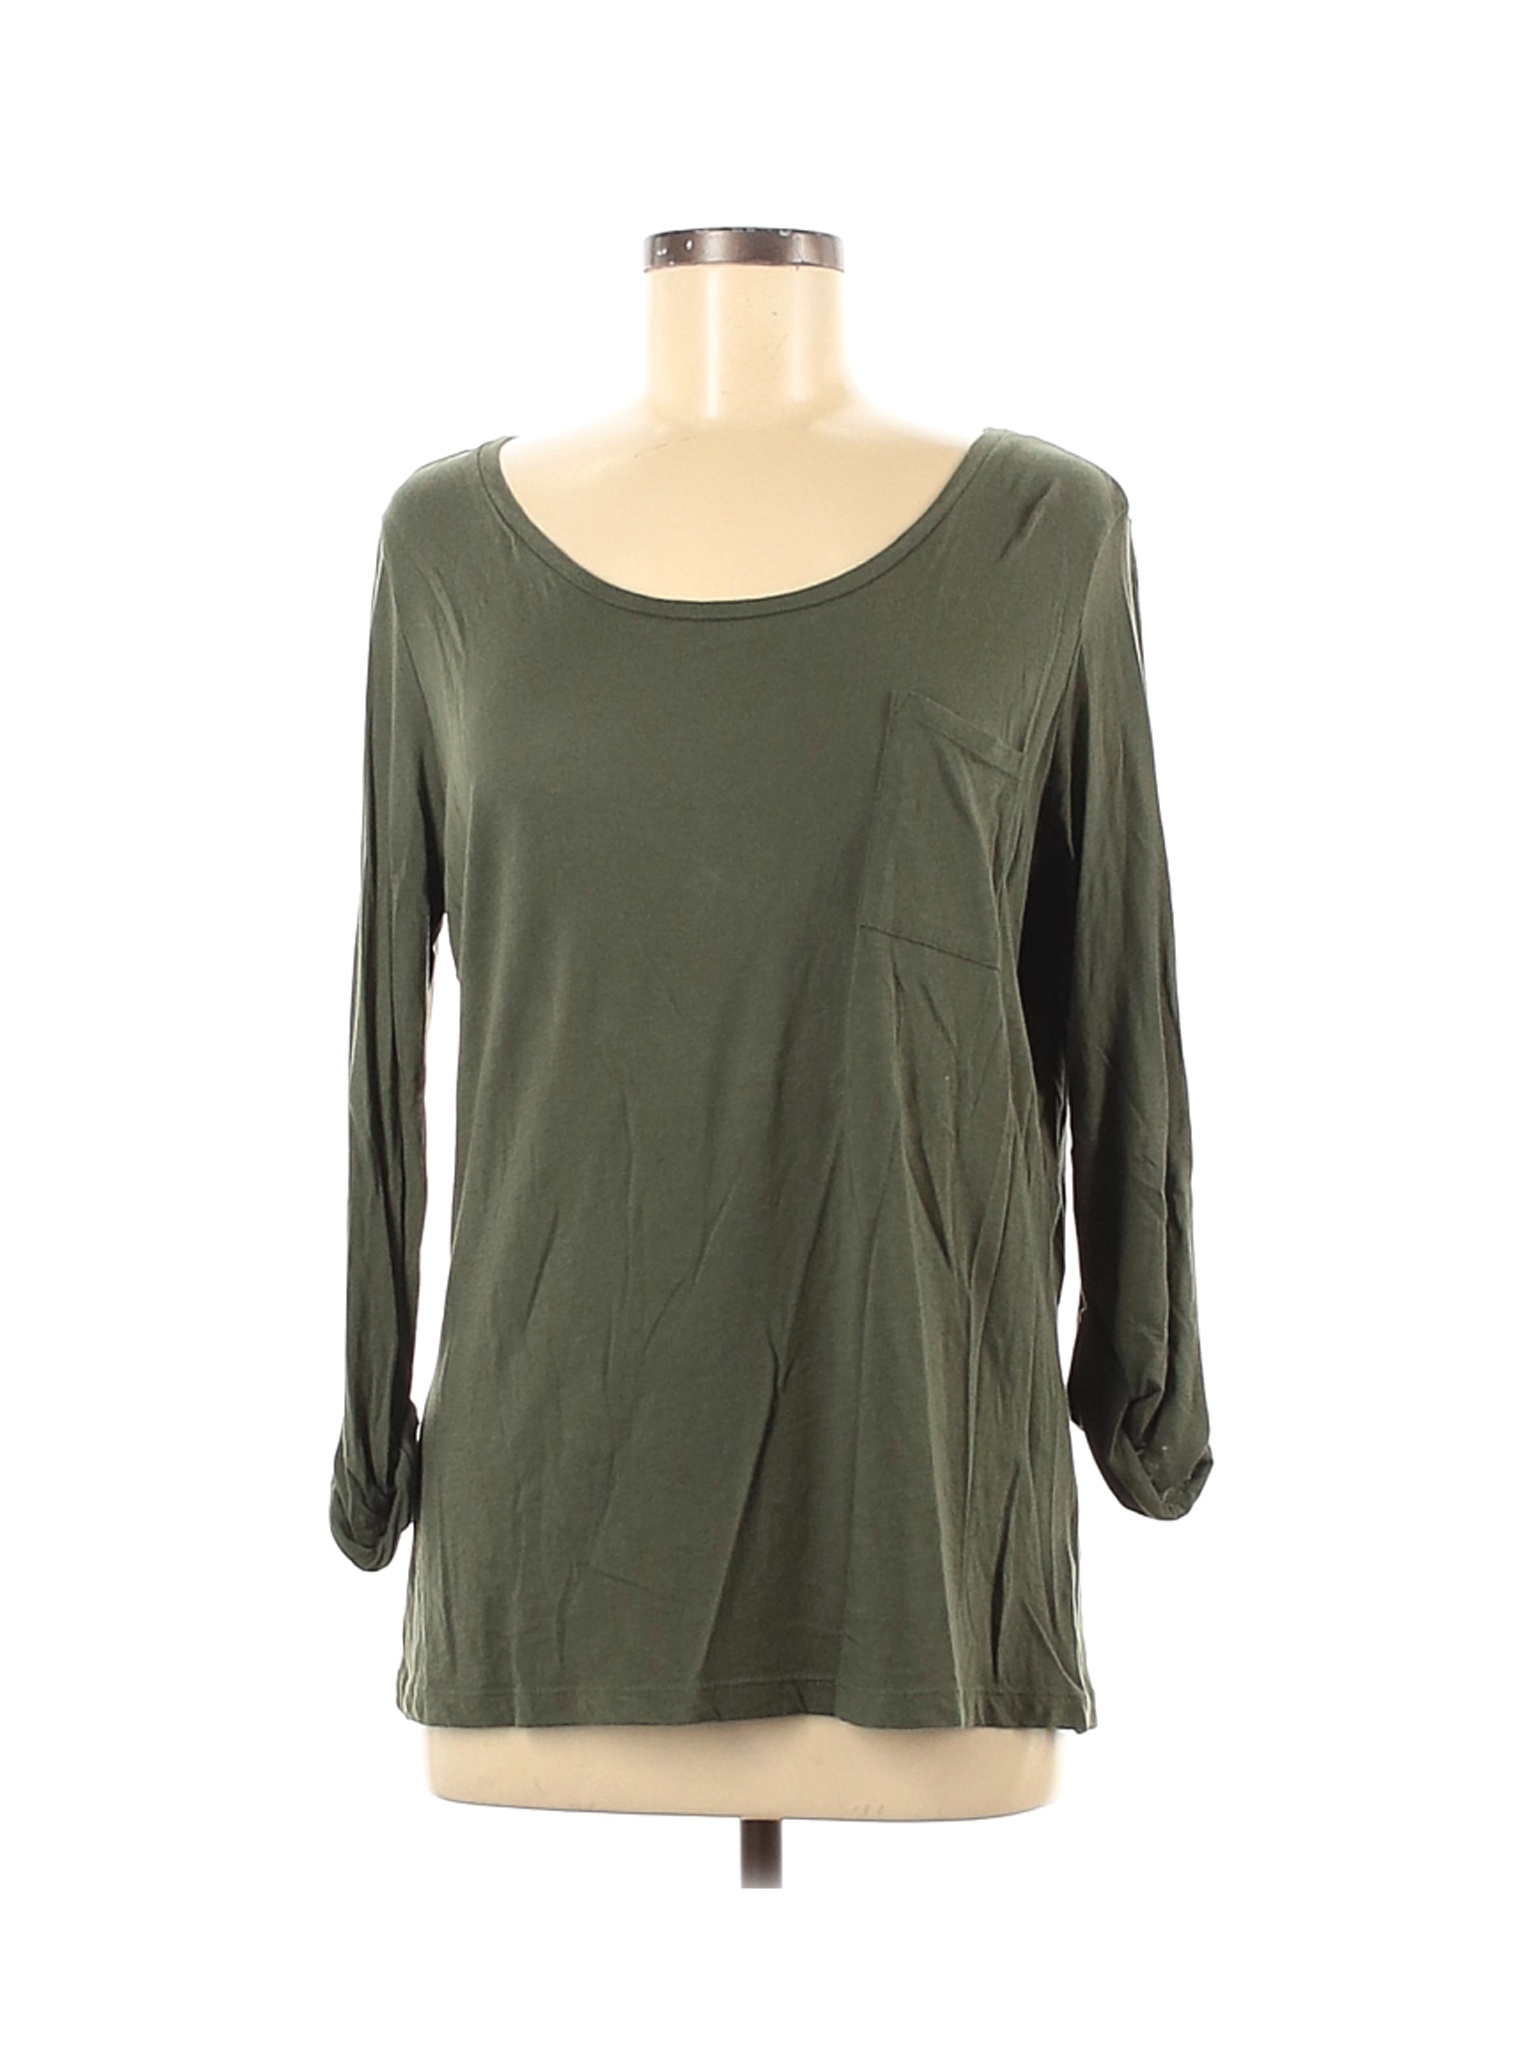 Cynthia Rowley TJX Women Green Long Sleeve T-Shirt L | eBay